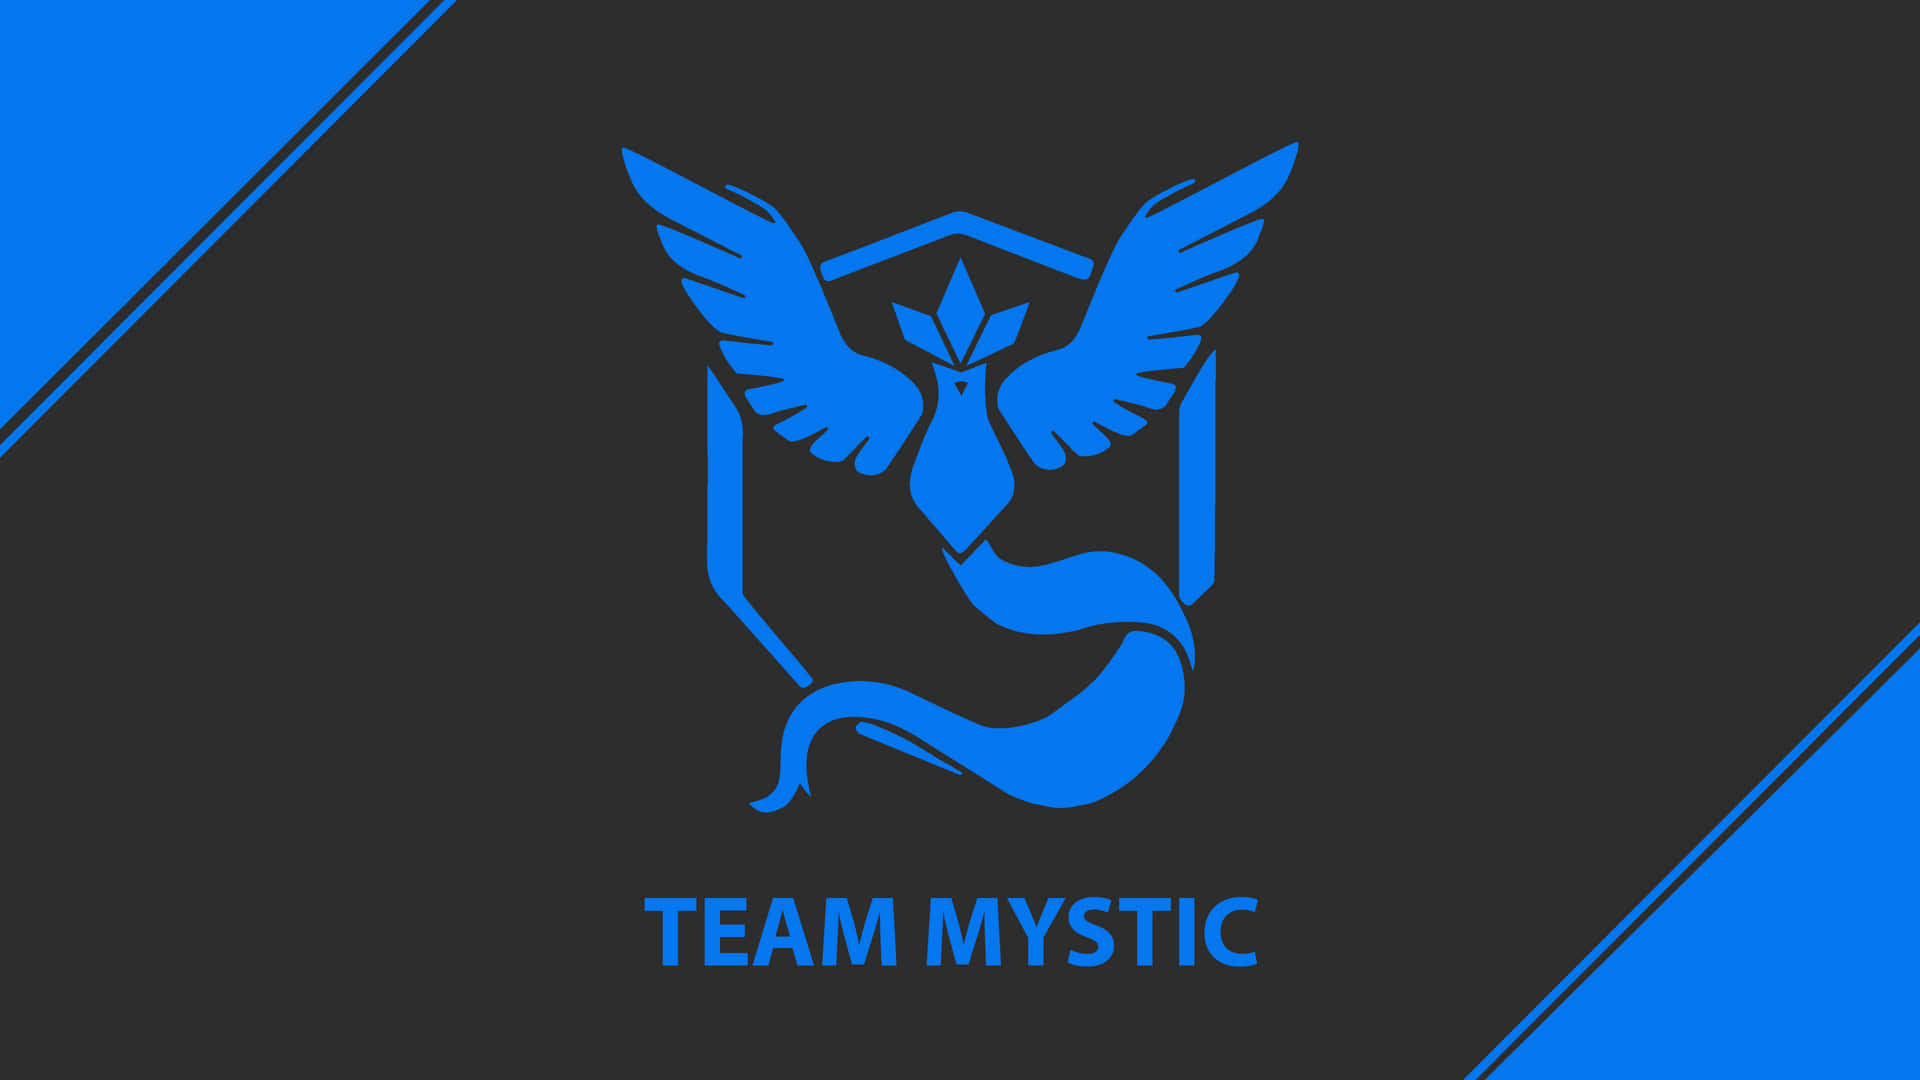 Team Mystic Logo On A Blue Background